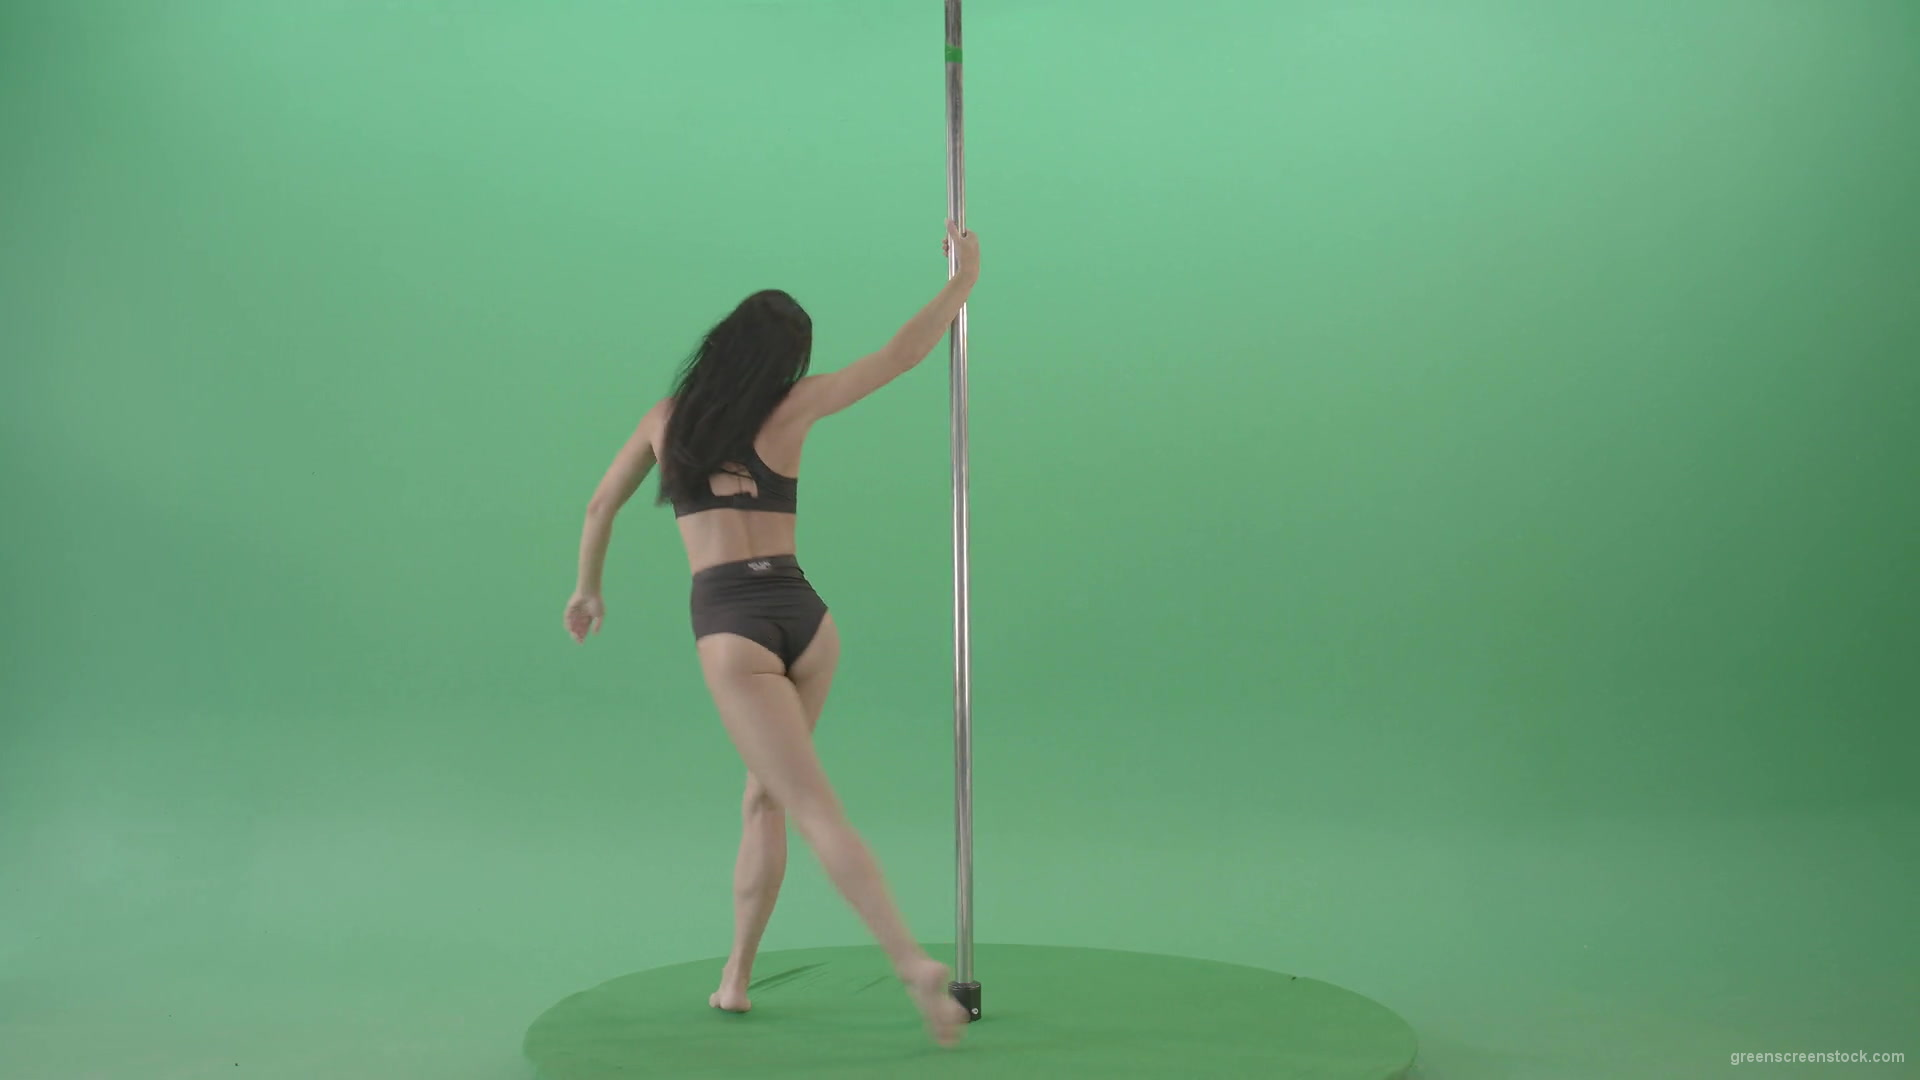 Artistic-gymnast-model-showing-strip-pole-dance-element-on-green-screen-4K-Video-Footage-1920_005 Green Screen Stock